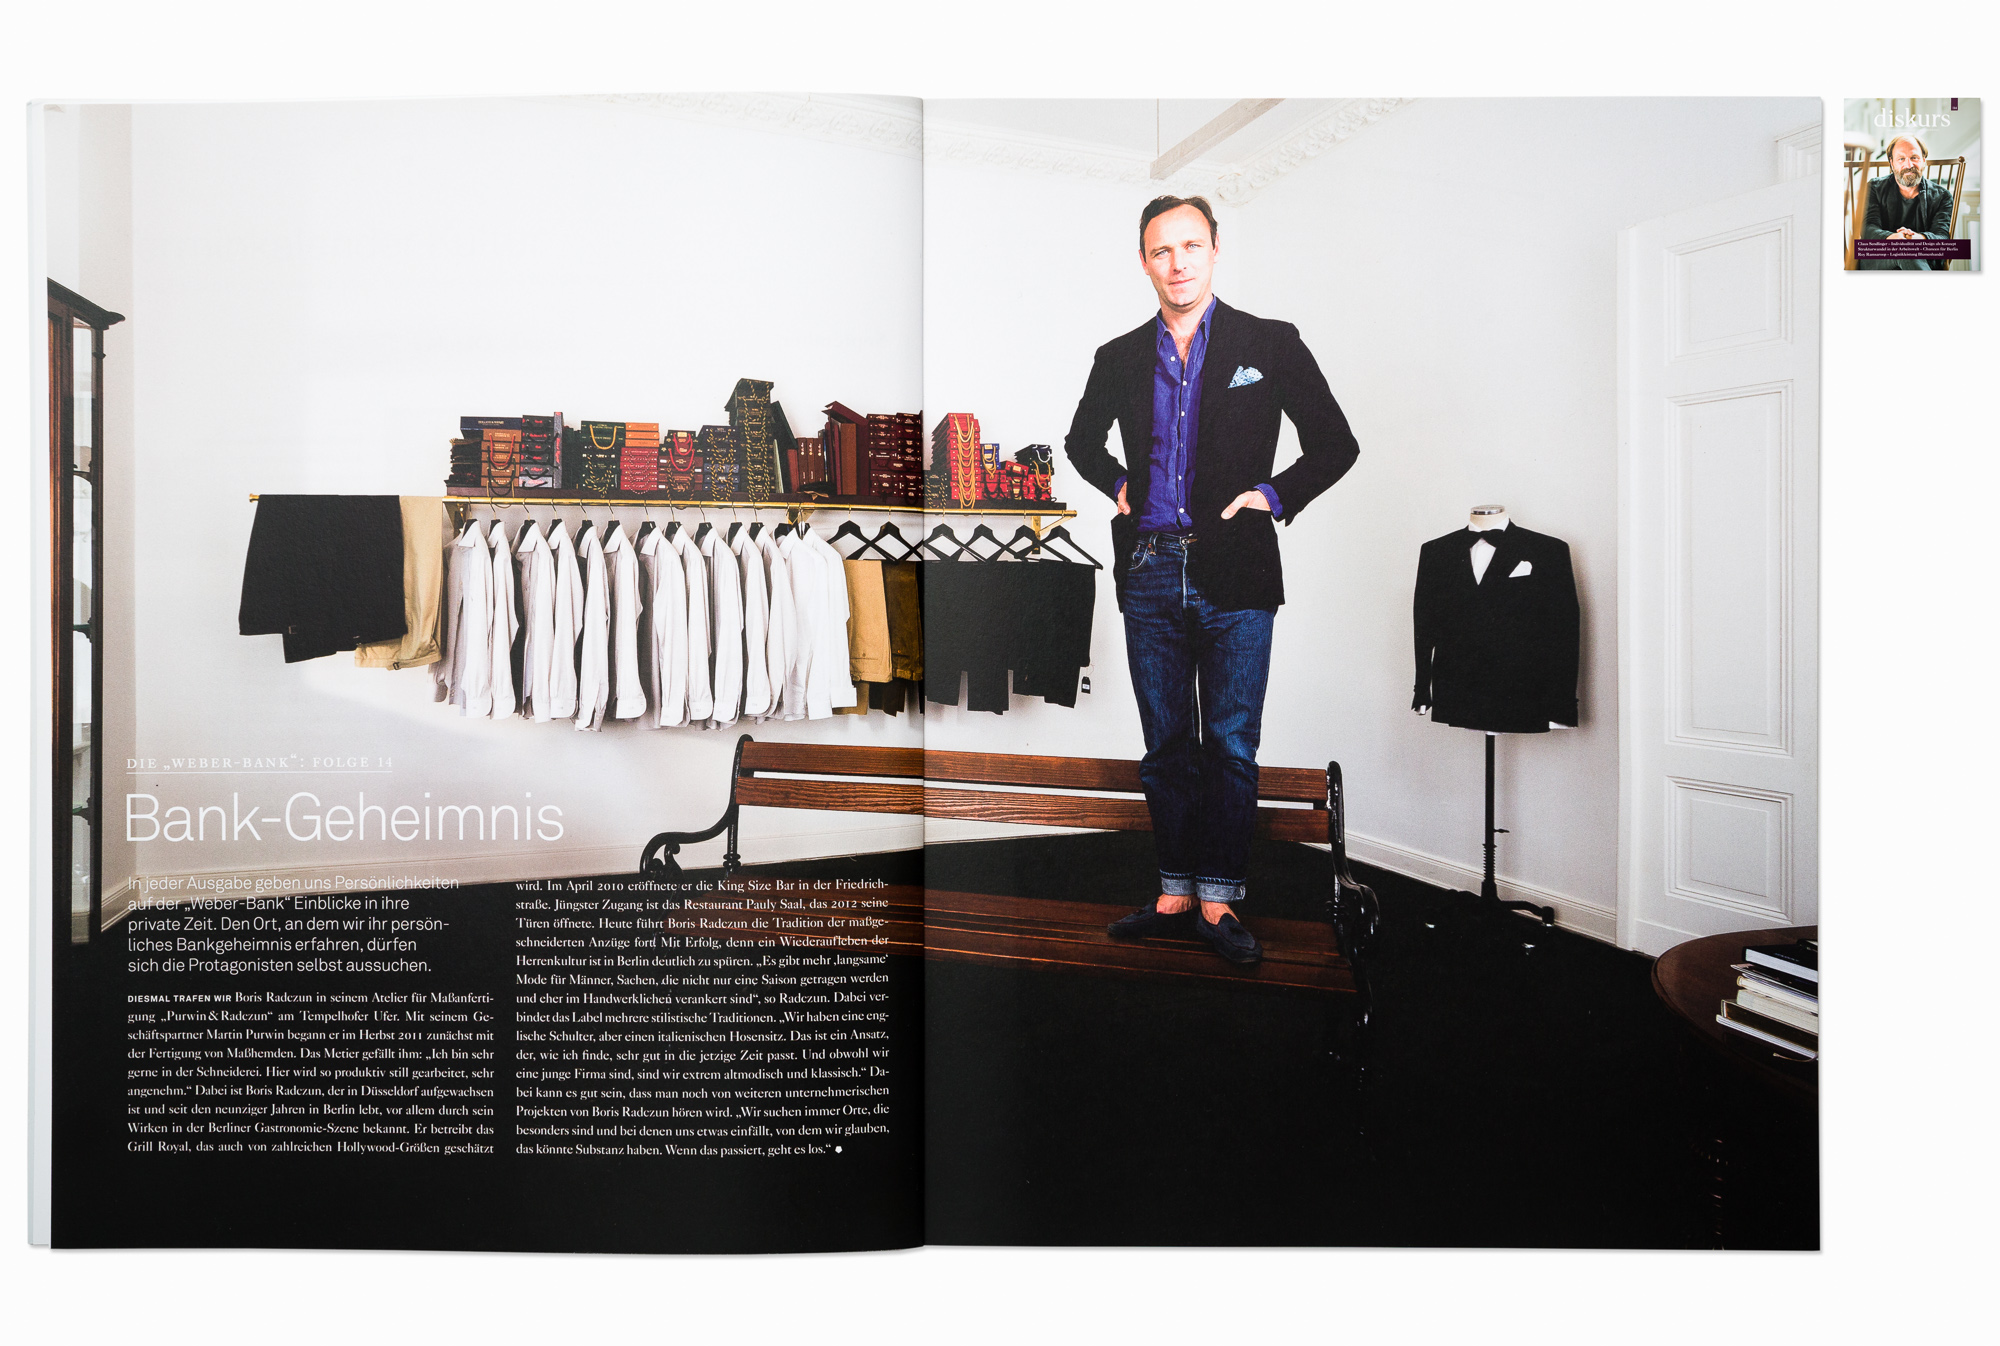   Entrepreneur Boris Radczun for Diskurs magazine, Berlin 2014  